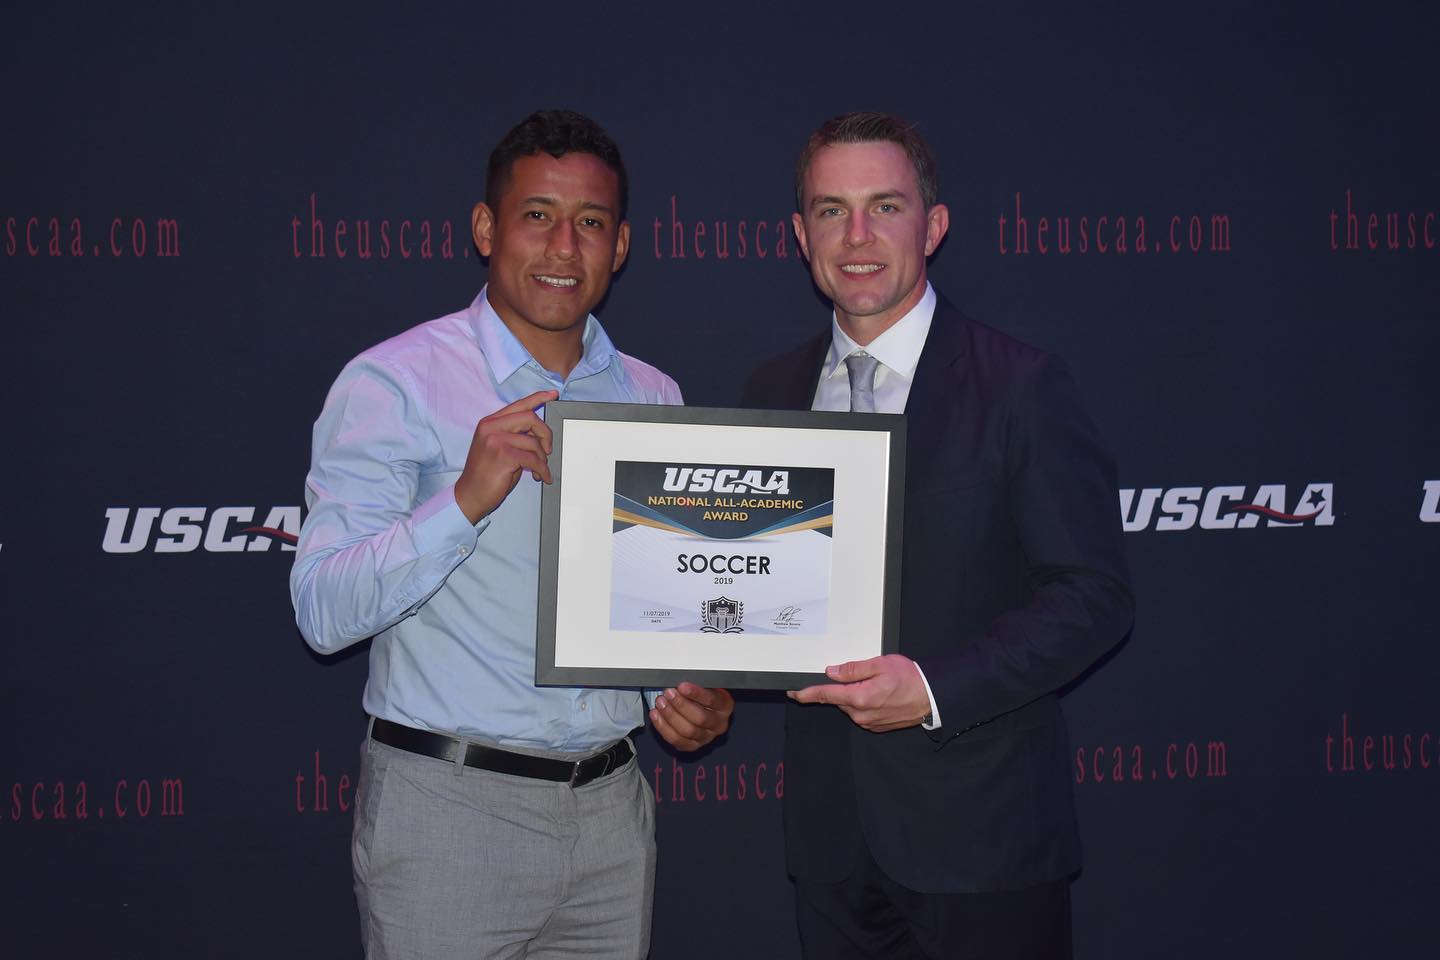 men's soccer player Victor Ruiz receiving the USCAA All-Academic Award